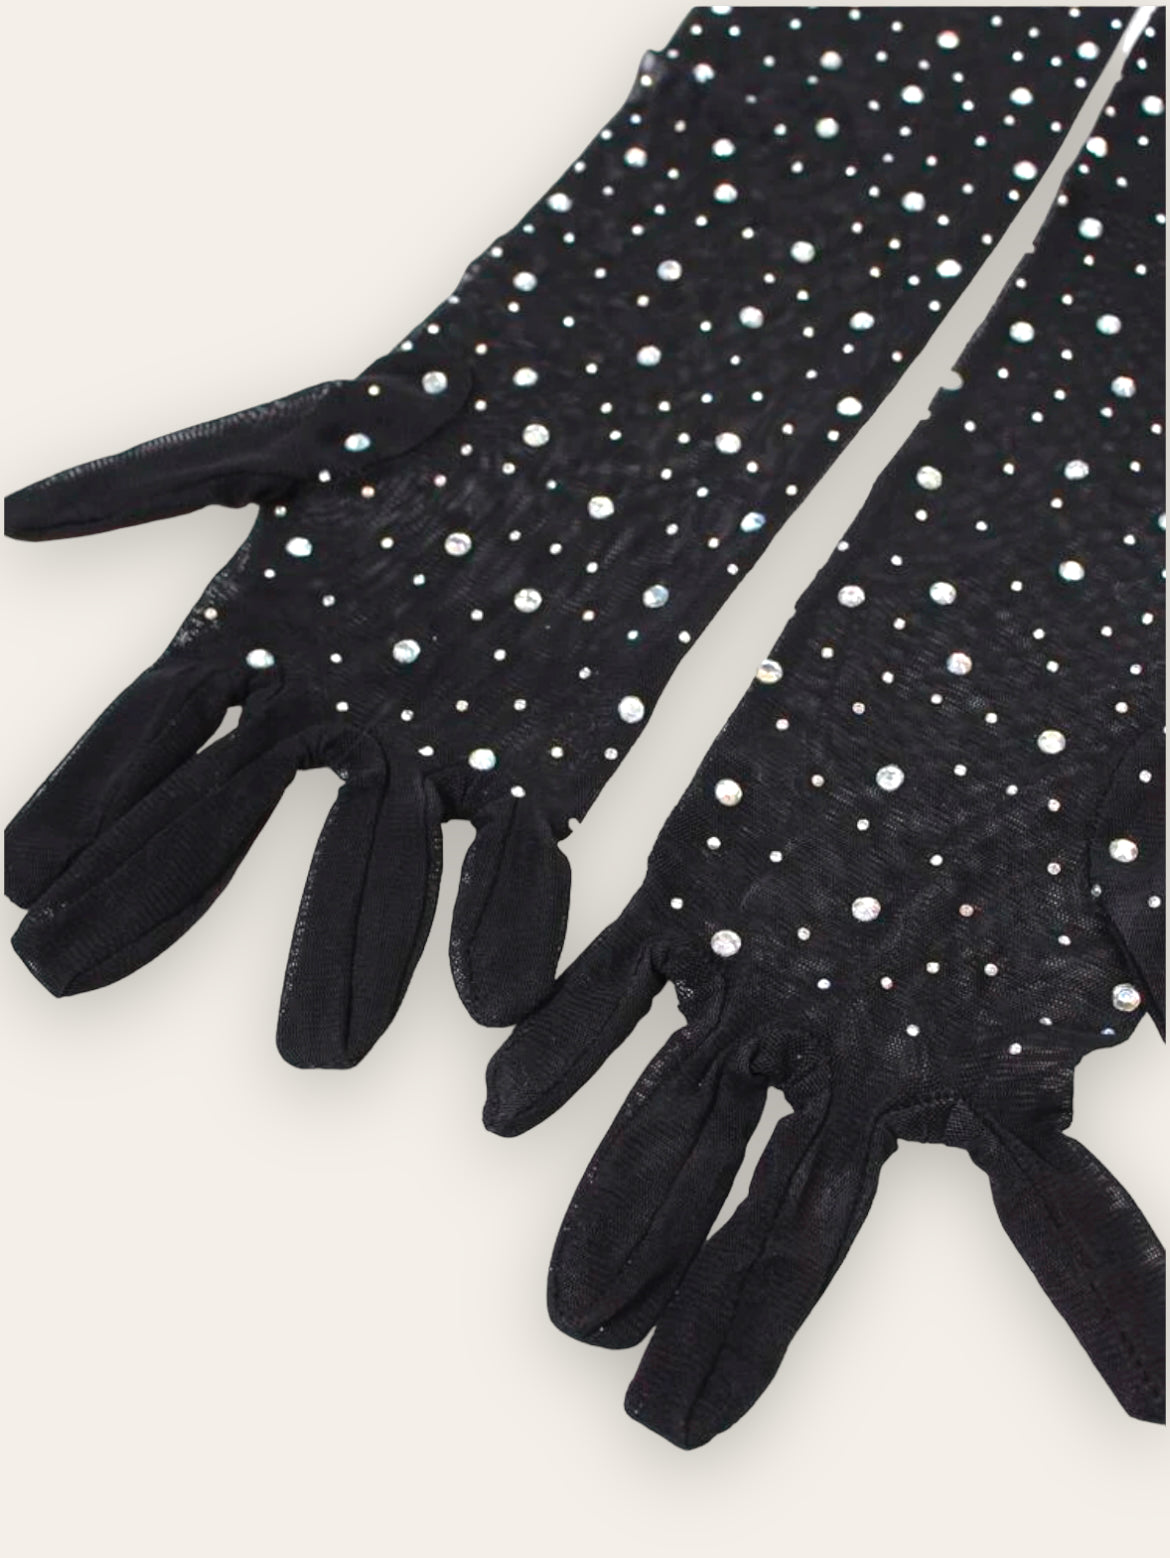 Black rhinestone gloves. 